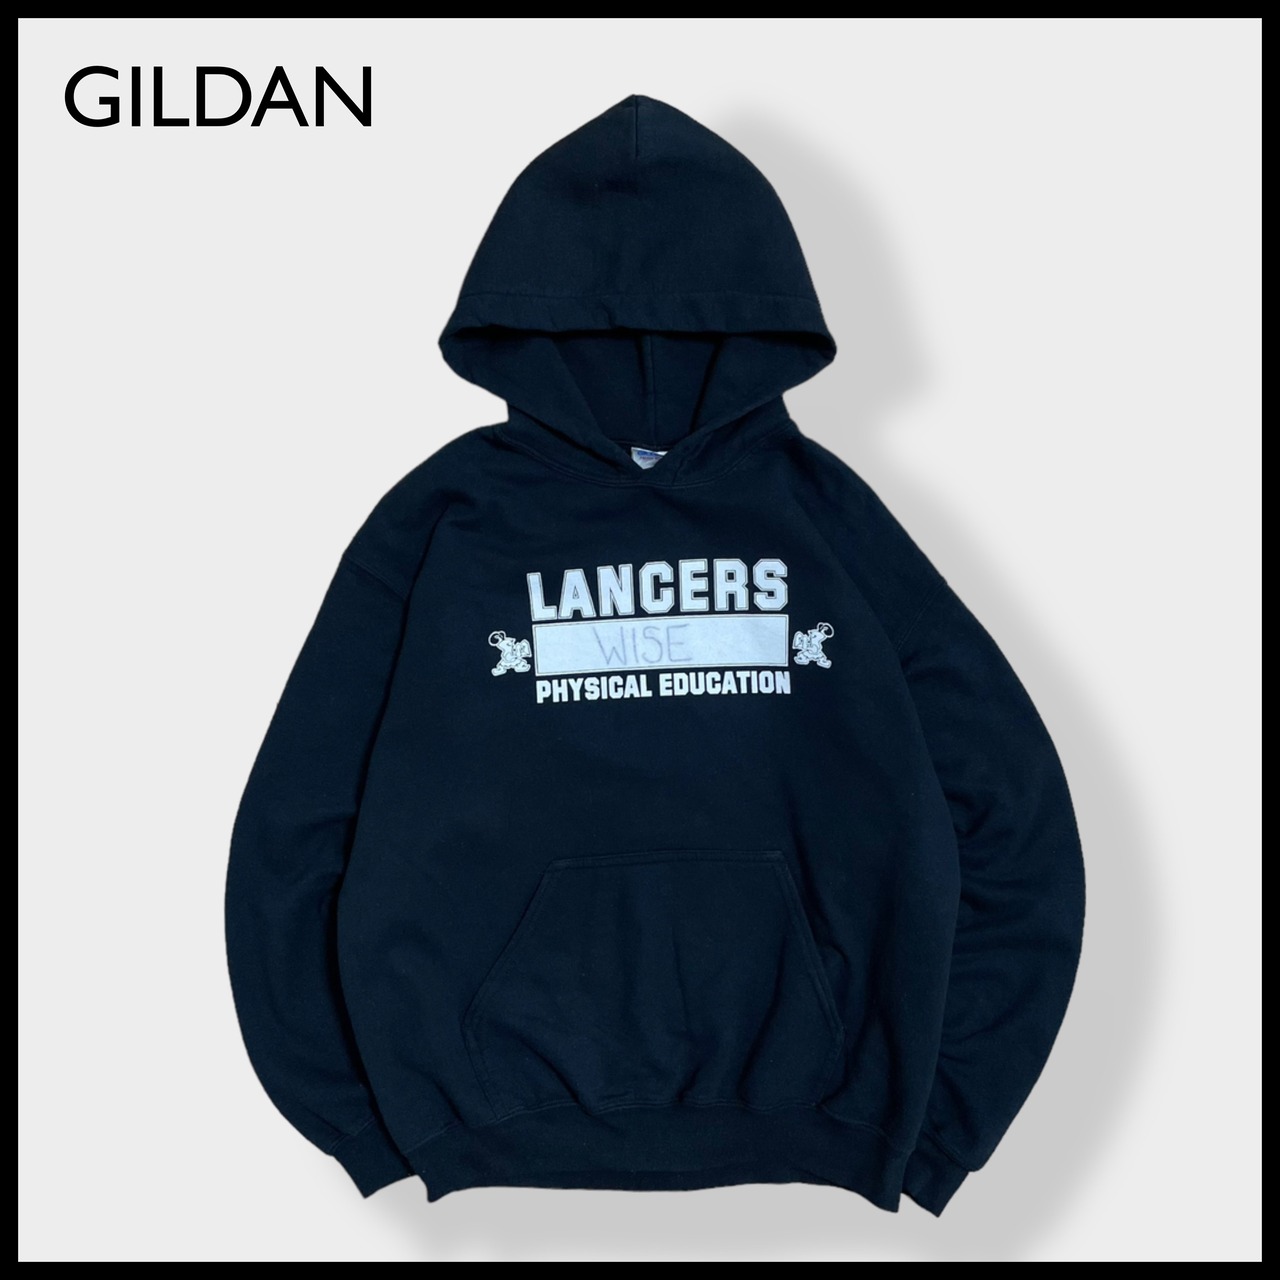 【GILDAN】LANCERS ロゴ プリント パーカー プルオーバー スウェット フーディー hoodie M ブラックランサーズ us古着